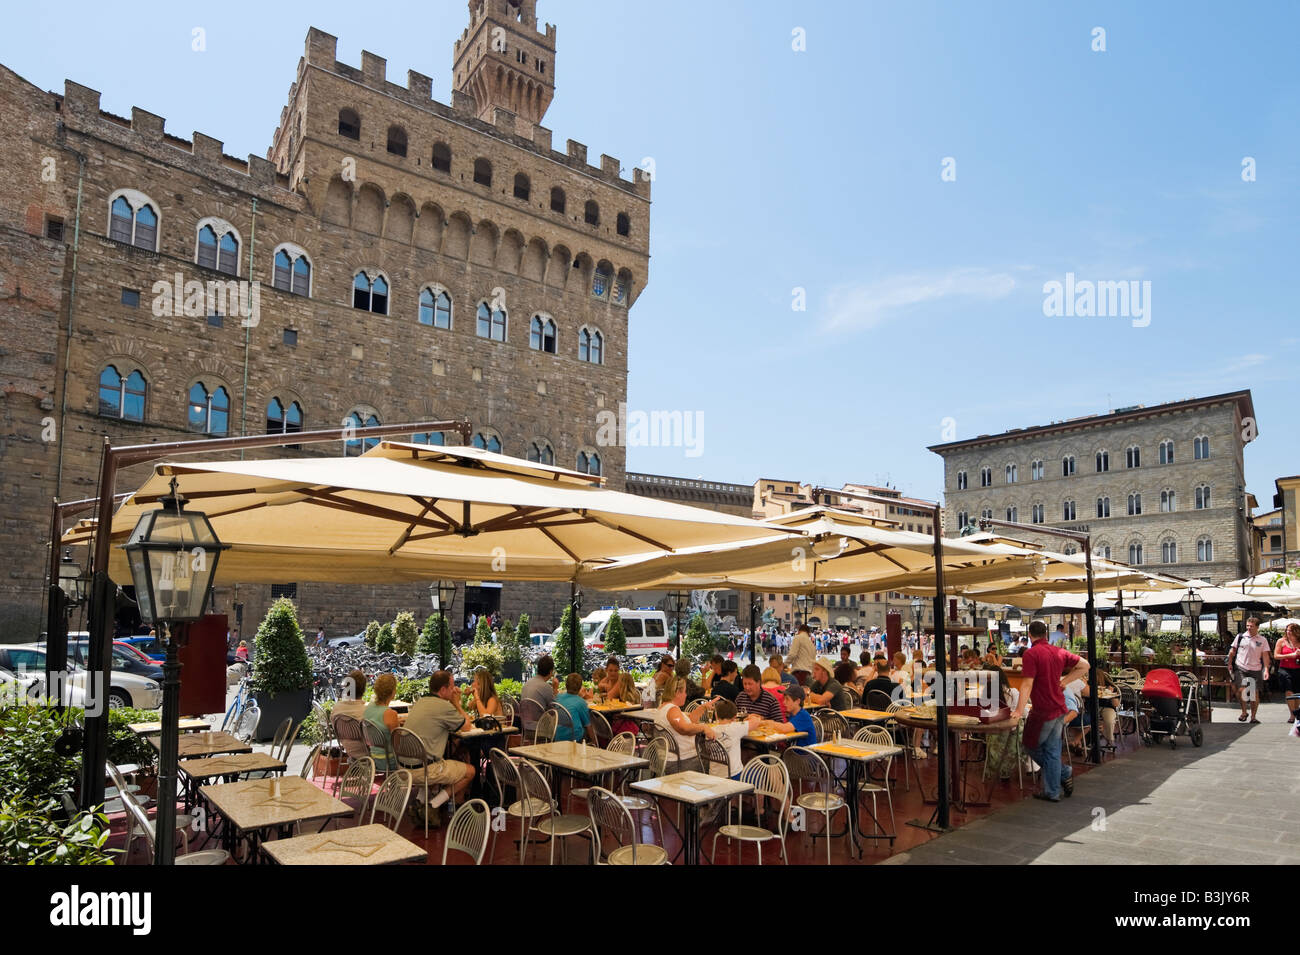 Restaurant in front of the Palazzo Vecchio in the Piazza della Signoria, Florence, Tuscany, Italy Stock Photo